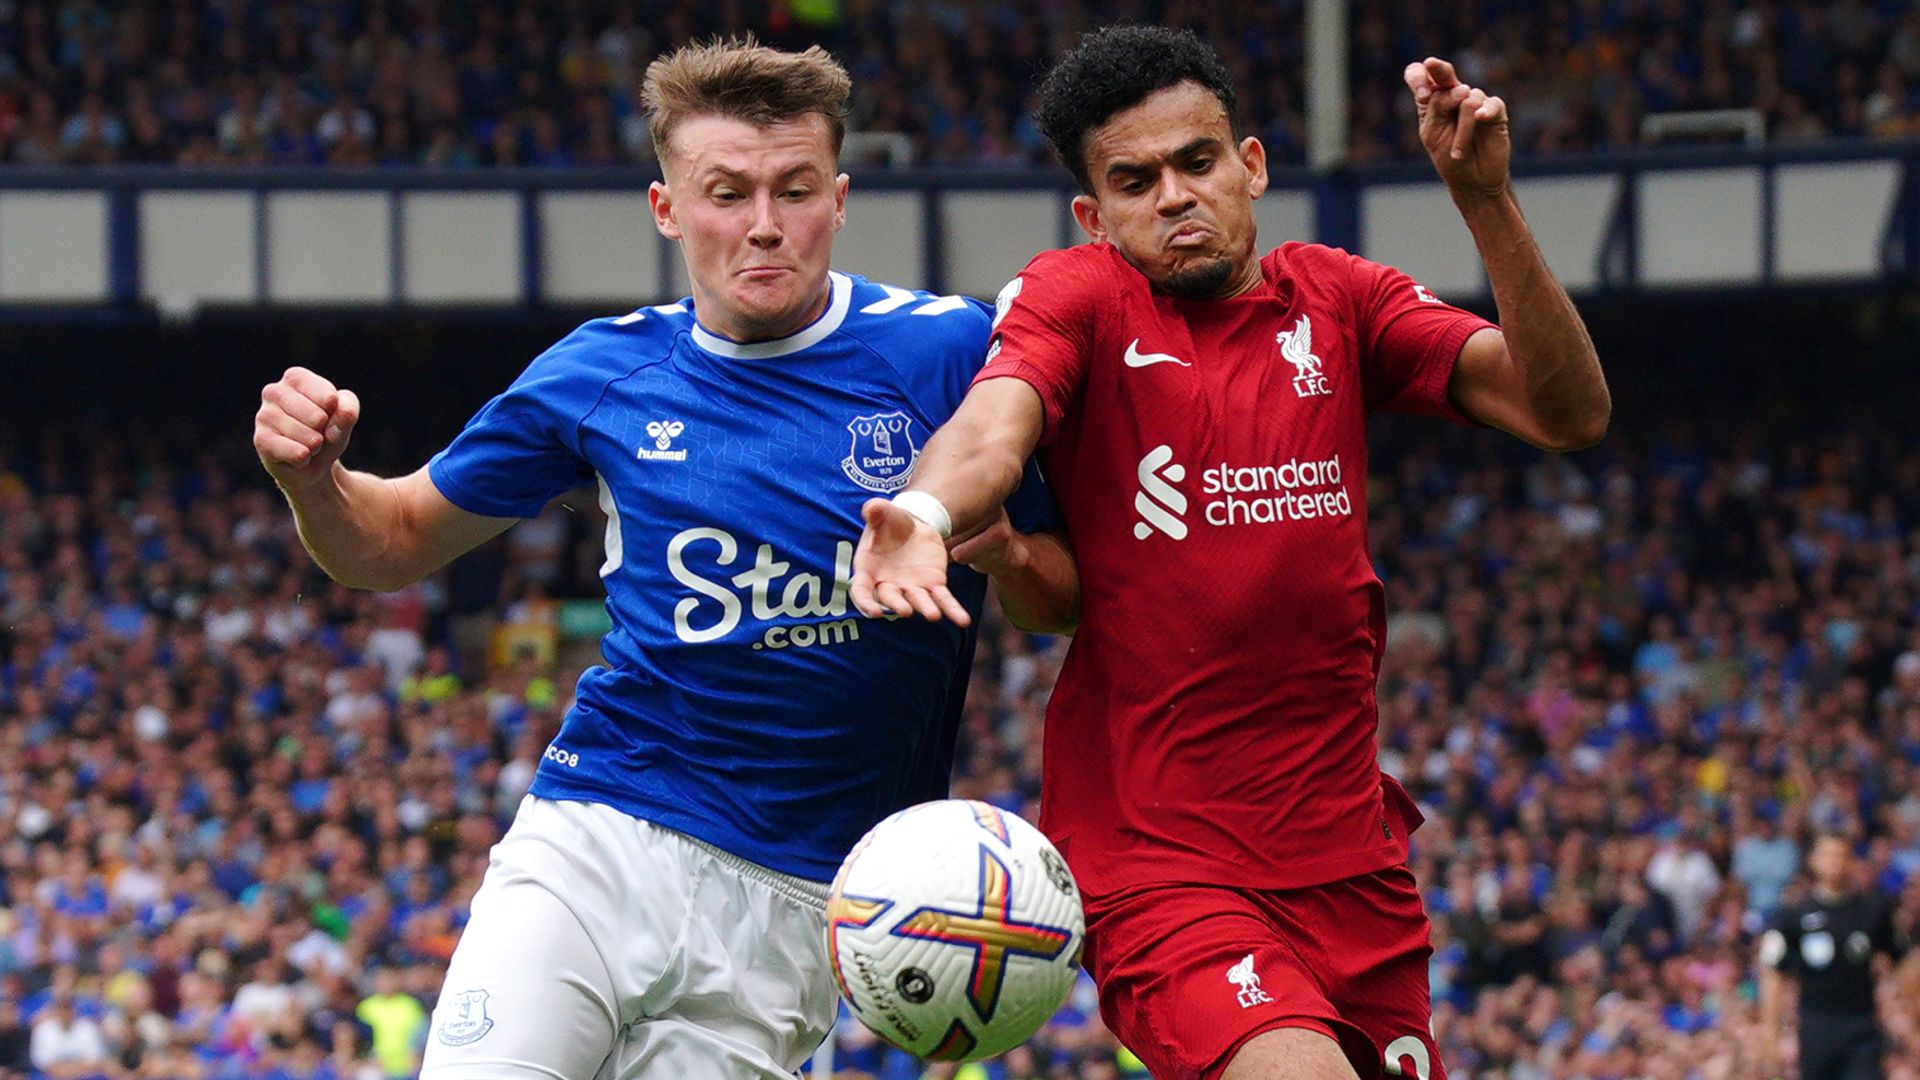 Everton 0-0 Liverpool: Honours even in frantic Merseyside derby as VAR denies Conor Coady winner